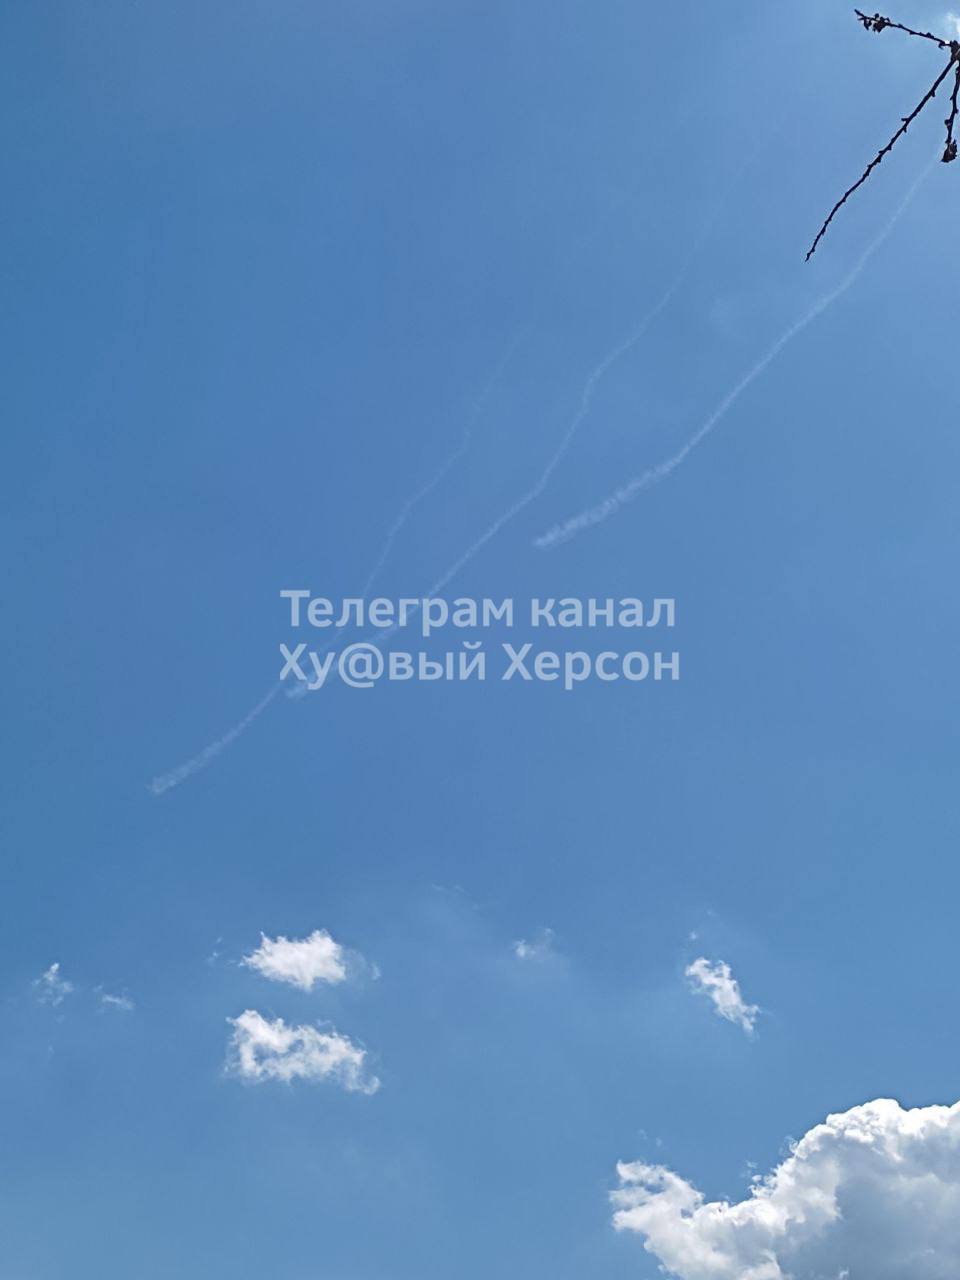 28-5-22 Su-35s shot down by MiG-29, Kherson b.jpg